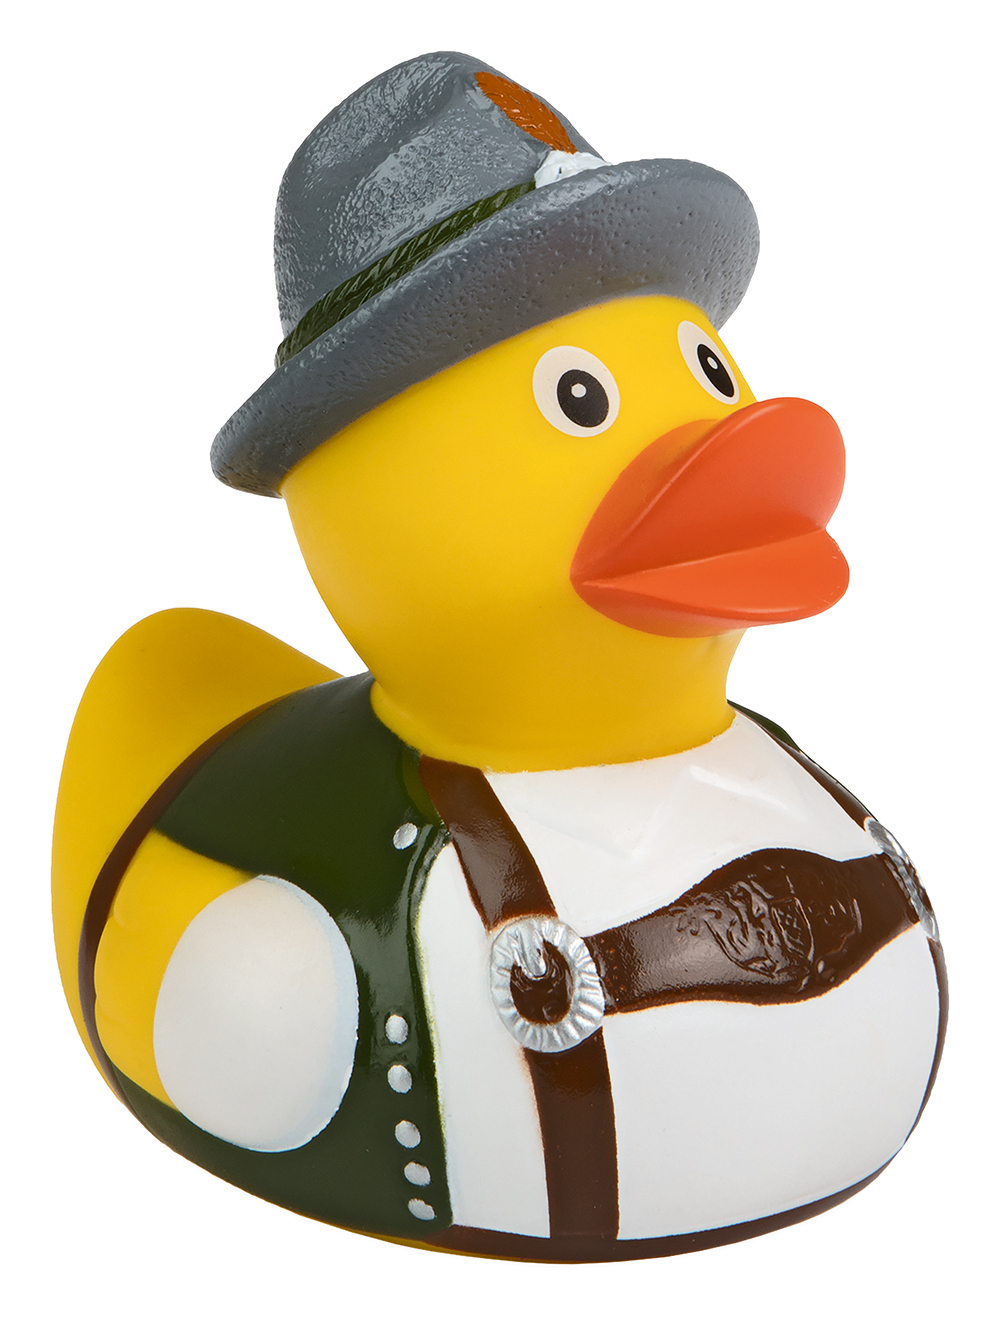 Squeaky duck Bavarian Costume